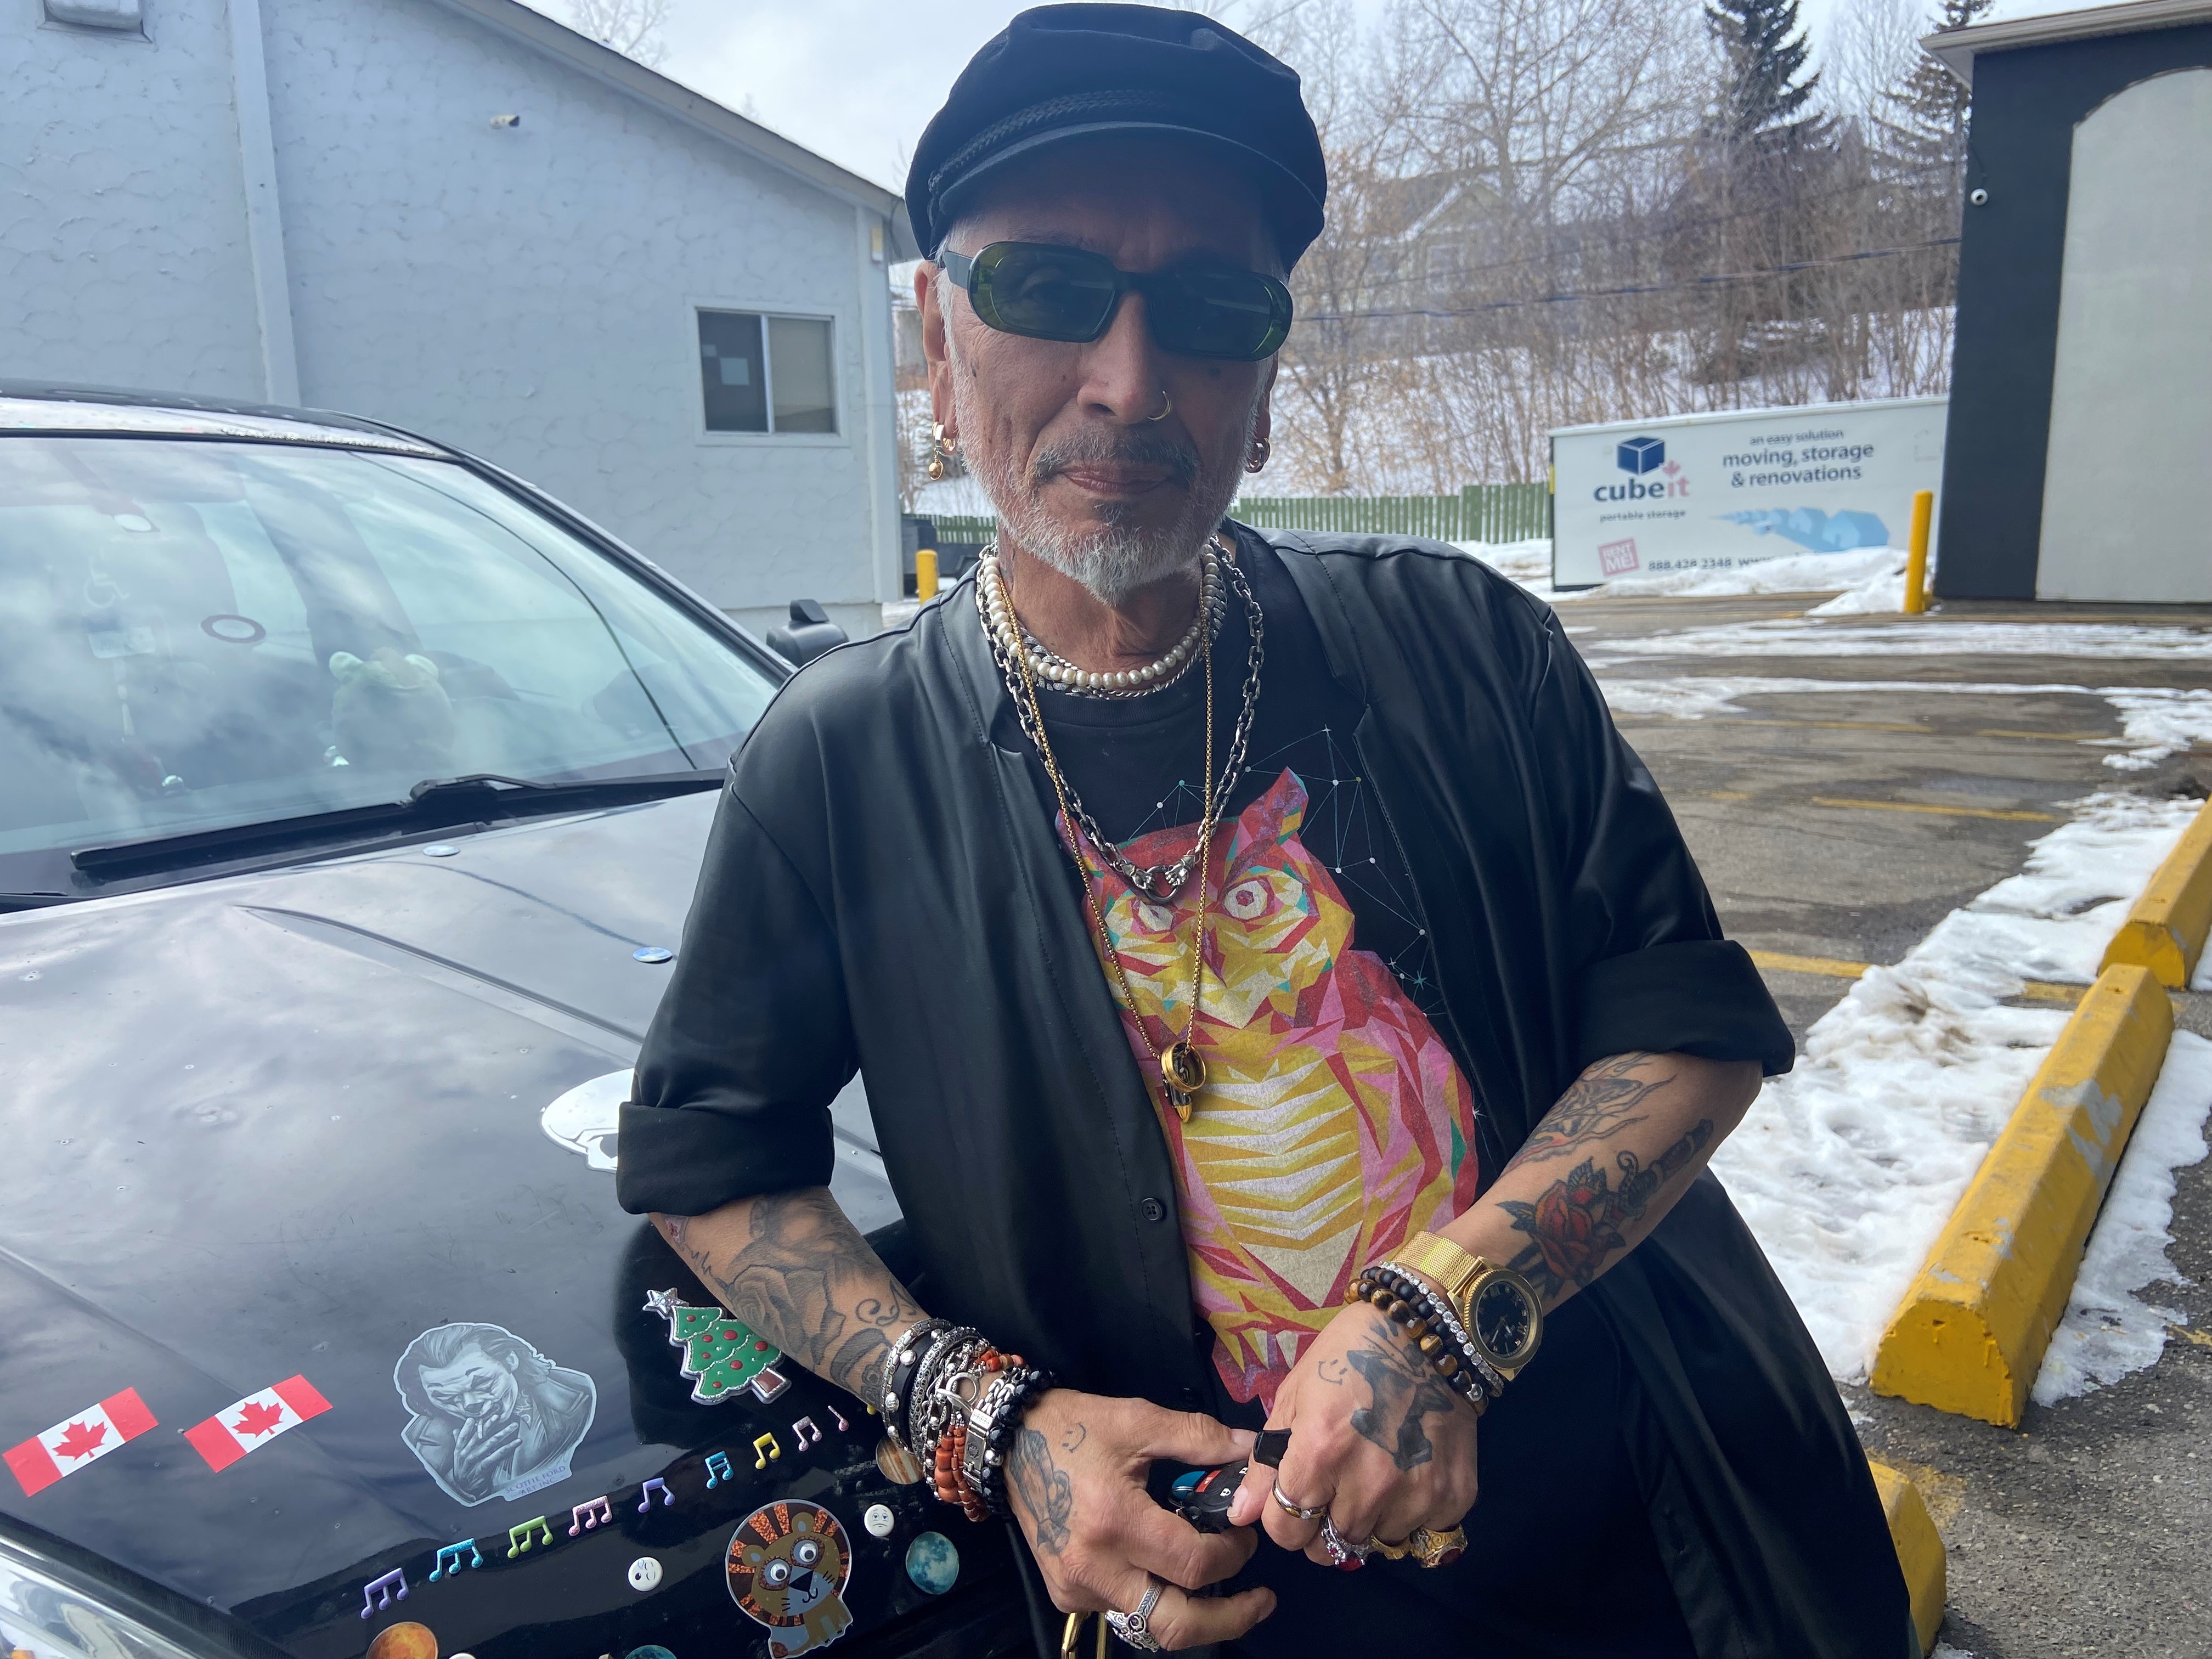 Award-winning Calgary musician living in car amid mental health, financial challenges